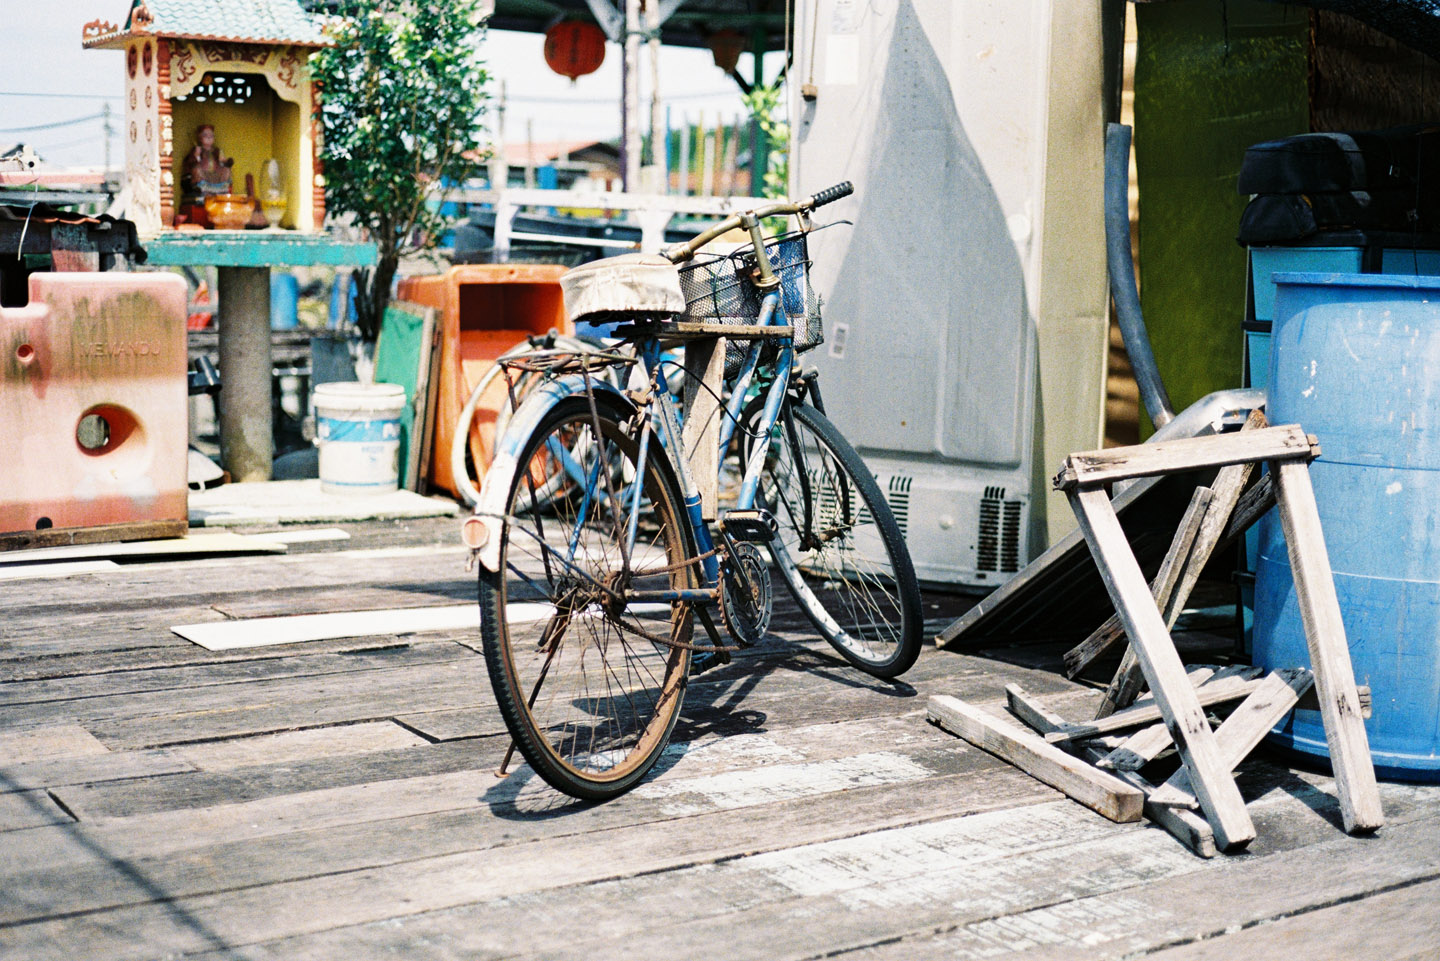 Kodak Ultramax 400 Contax G1 - Pulau Ketam Bicycle